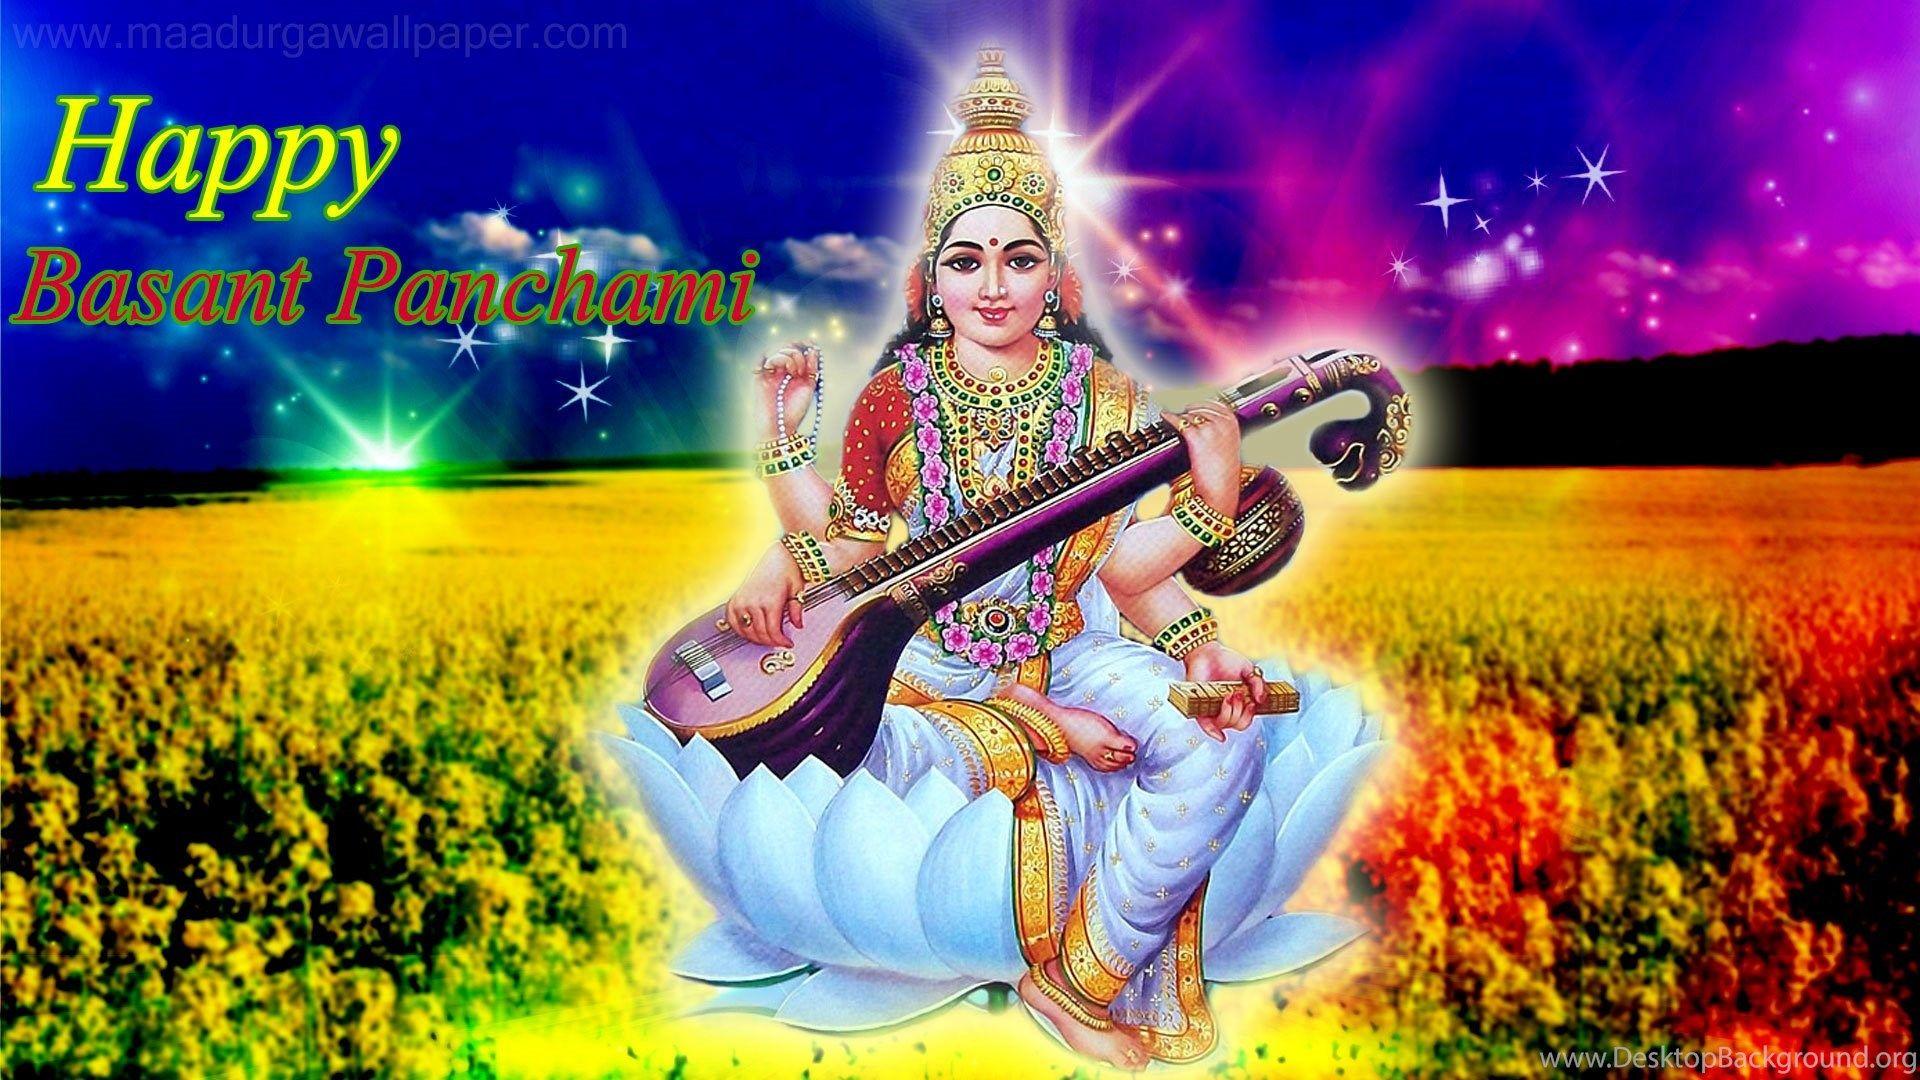 Maa Saraswati Wallpaper, Image & Photo Free Download Desktop